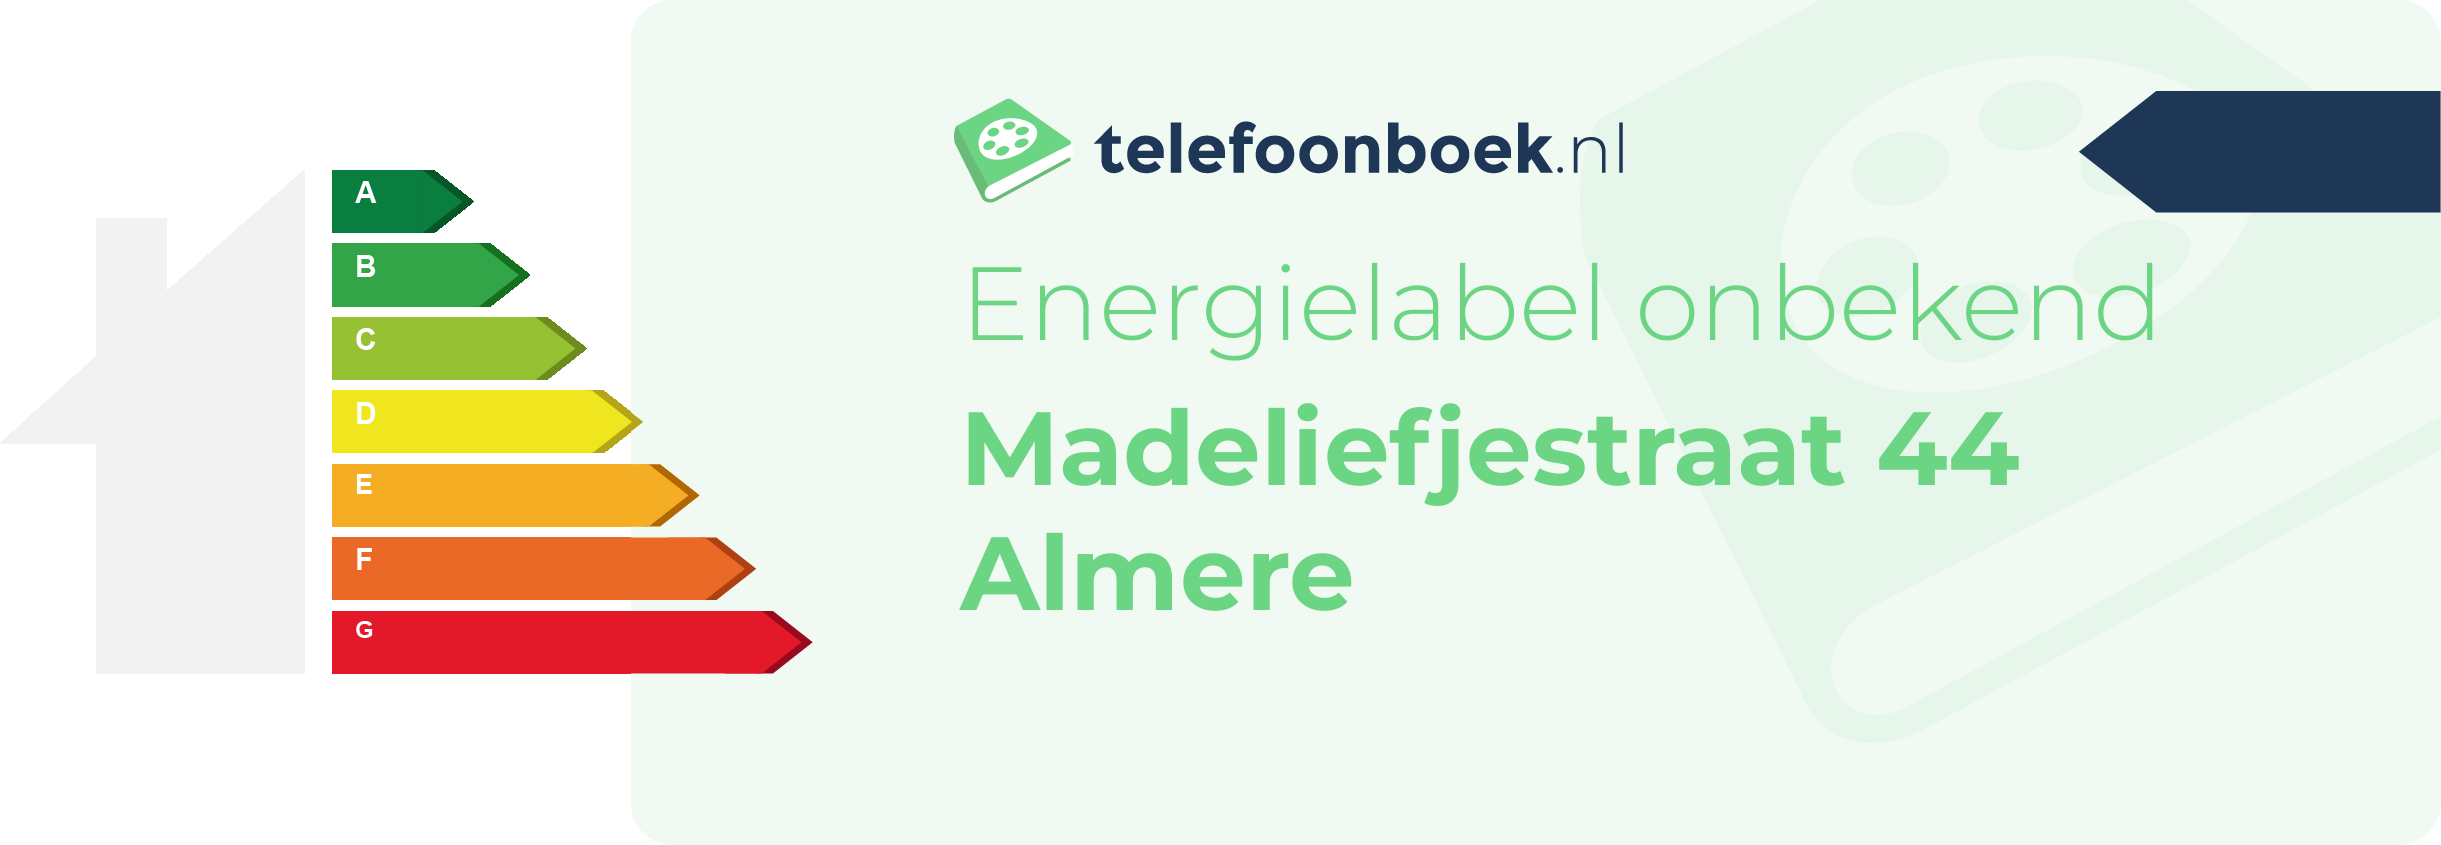 Energielabel Madeliefjestraat 44 Almere